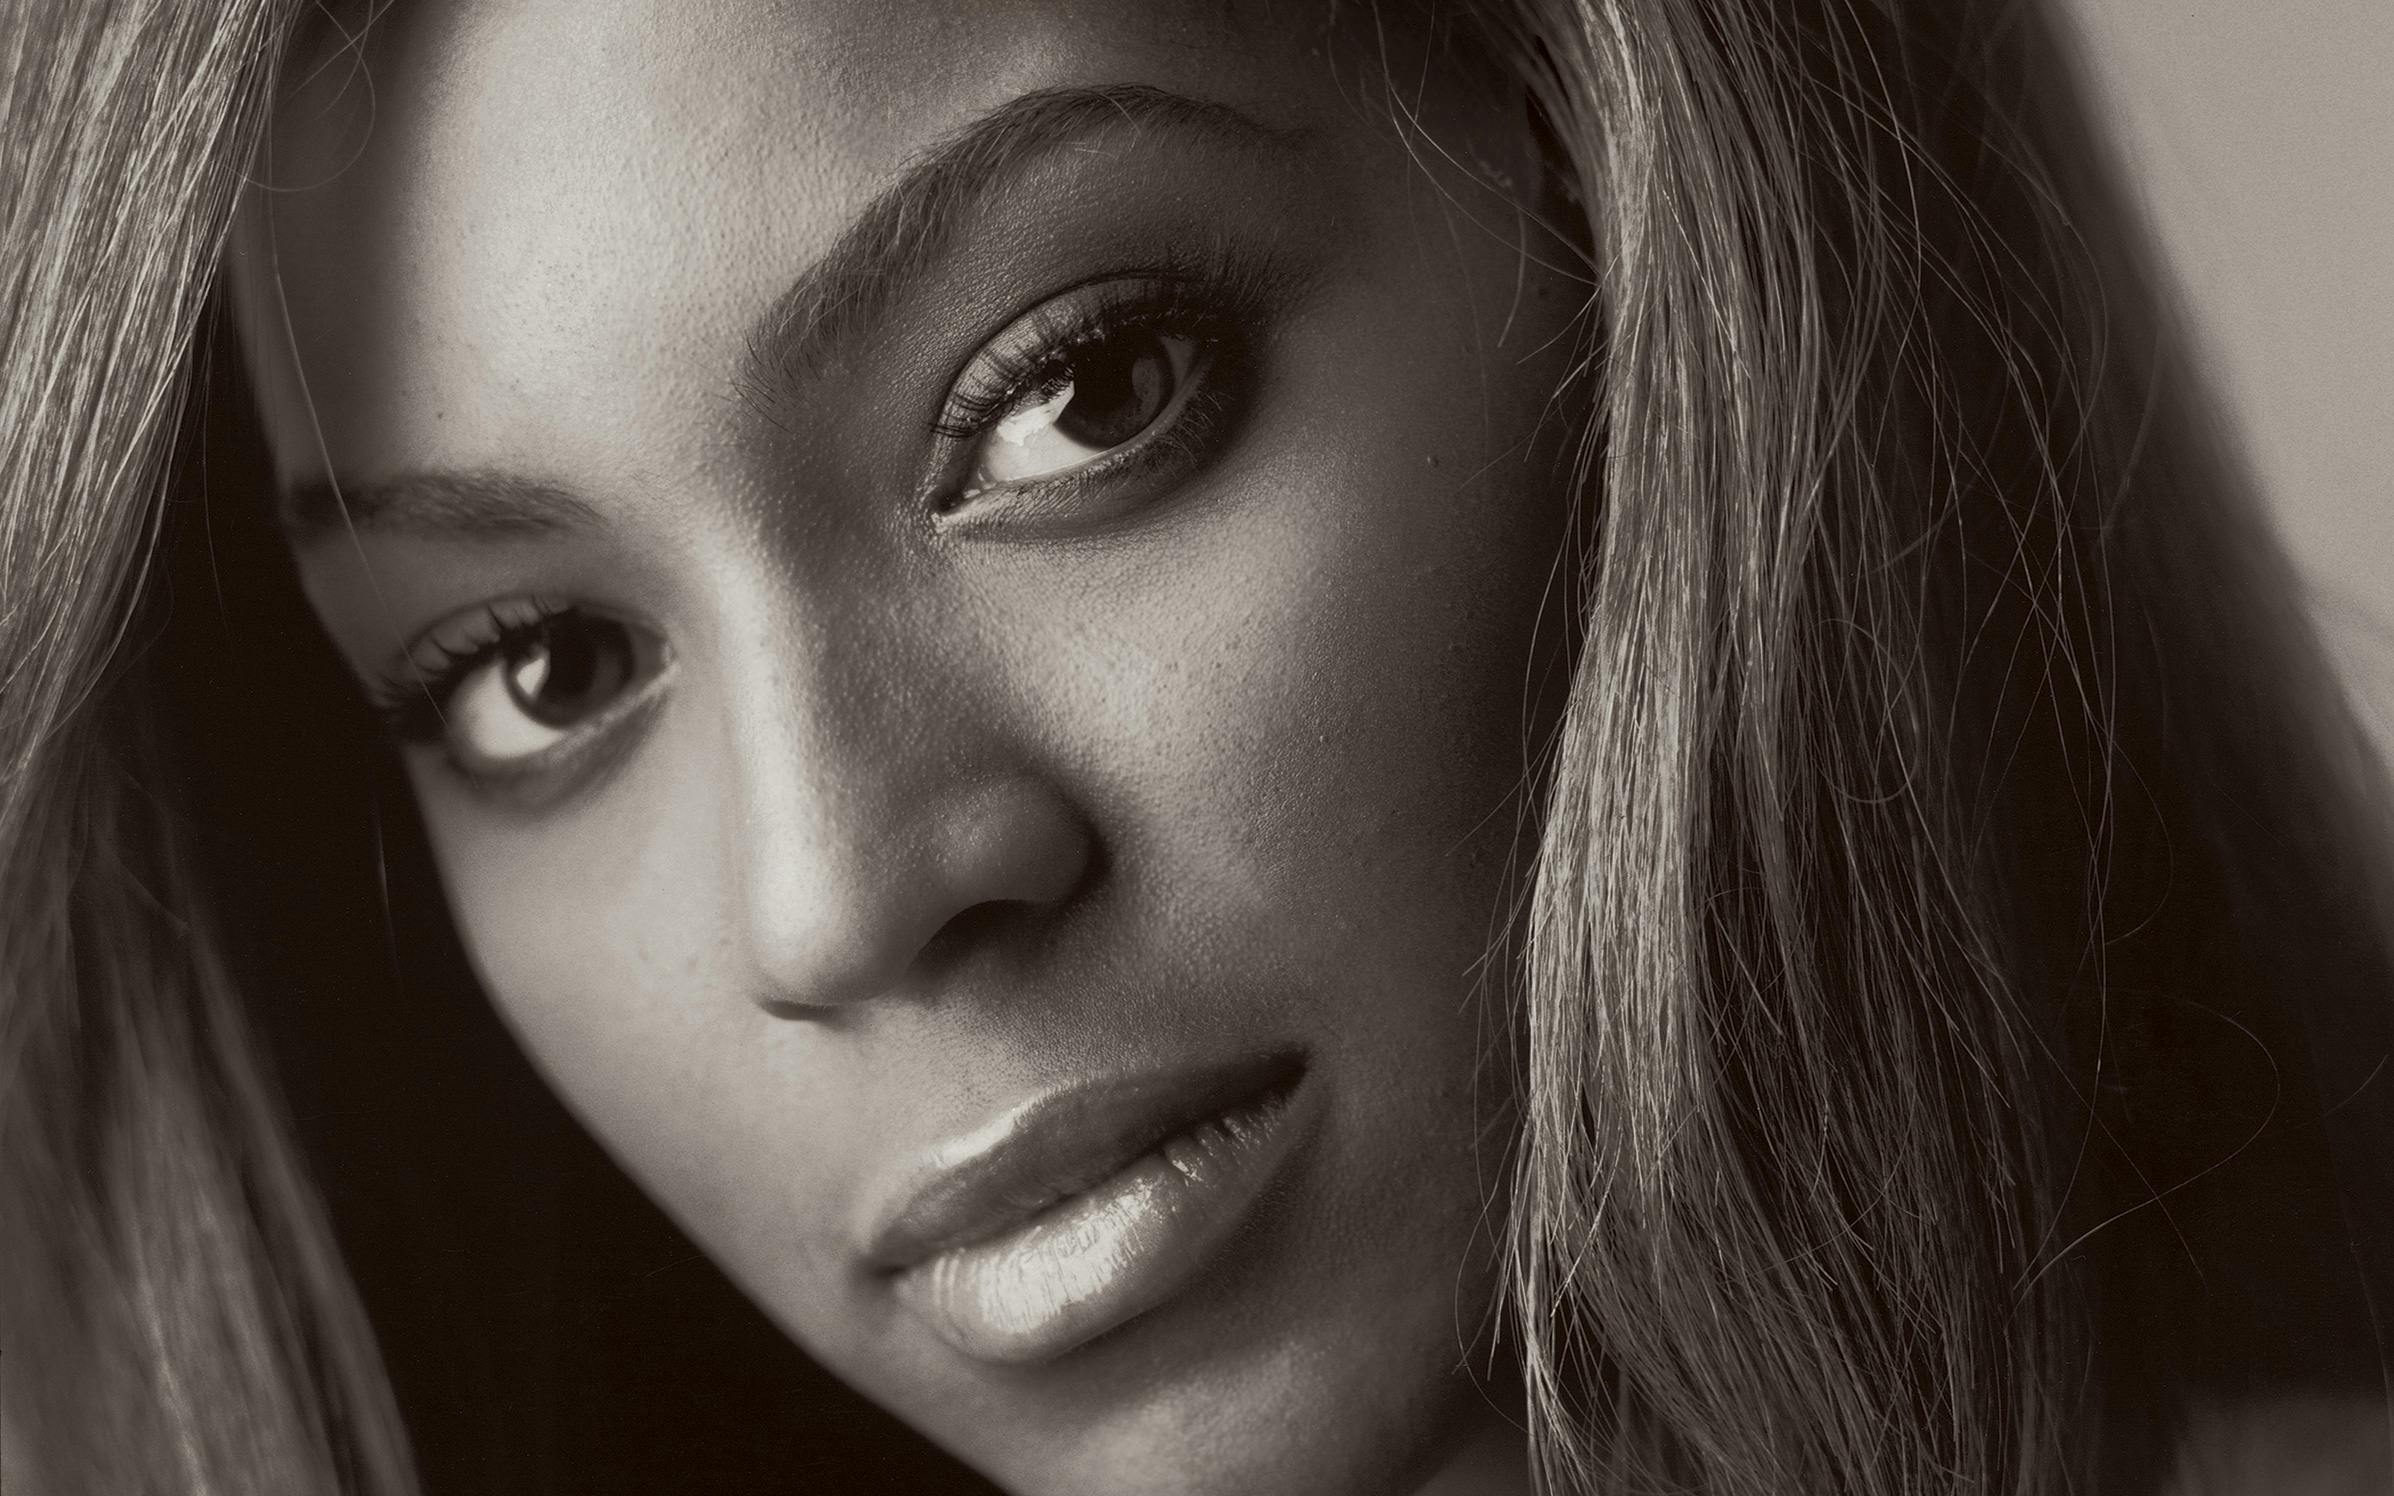 Beyoncé – Crazy In Love (Without Rap) Lyrics